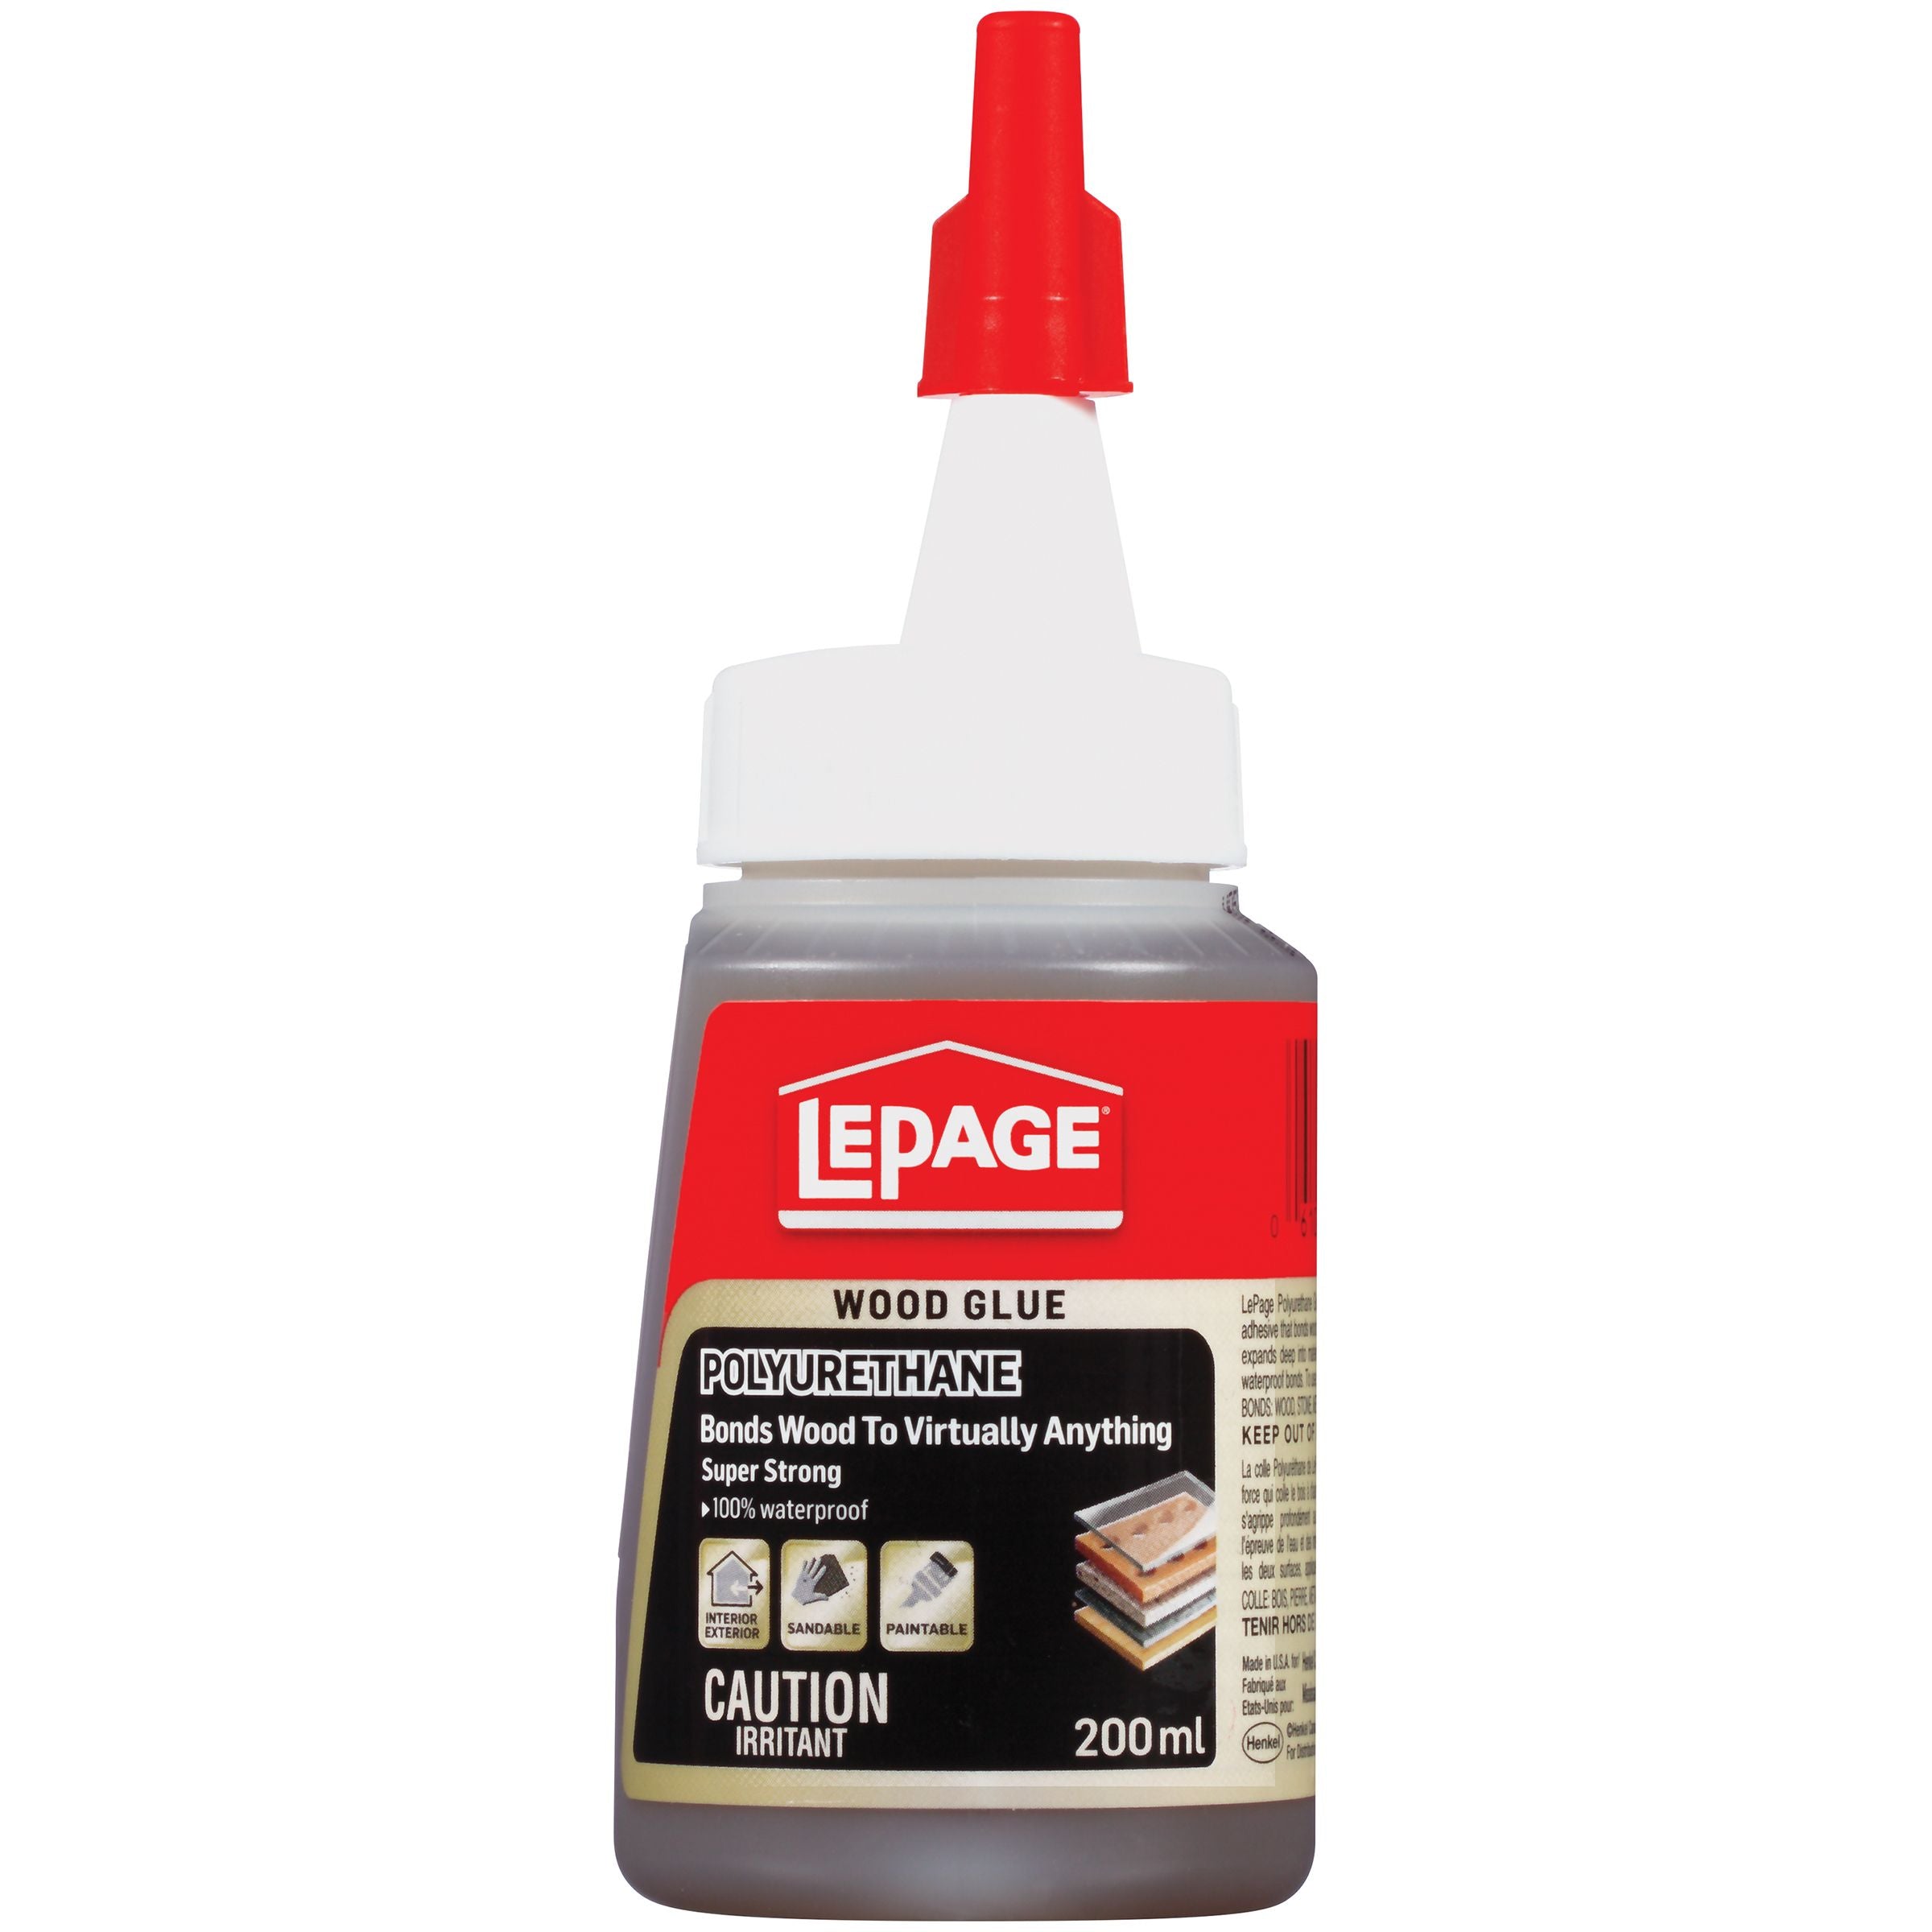 LePage Polyurethane Wood Glue, Light Tan, 200 ml Bottle, Pack of 1